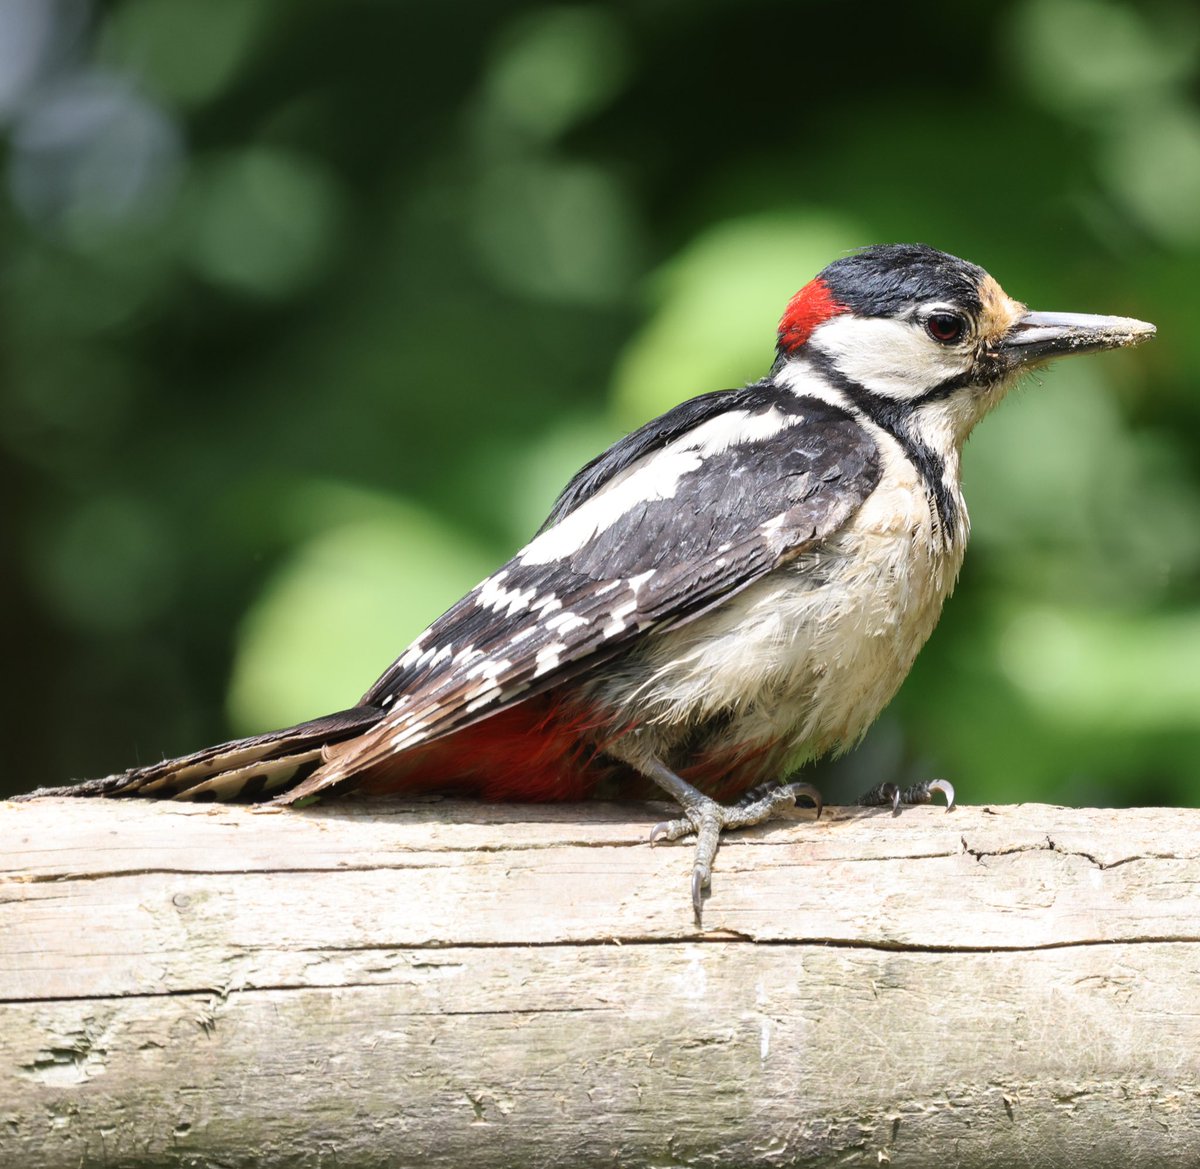 Great spotted woodpecker taking a breather #WoodpeckerWednesday #woodpecker #greatspottedwoodpecker #bird #birding #birdoftheday #birdphotography #bbccountryfilemagpotd #BBCWildlifePOTD #BirdUp